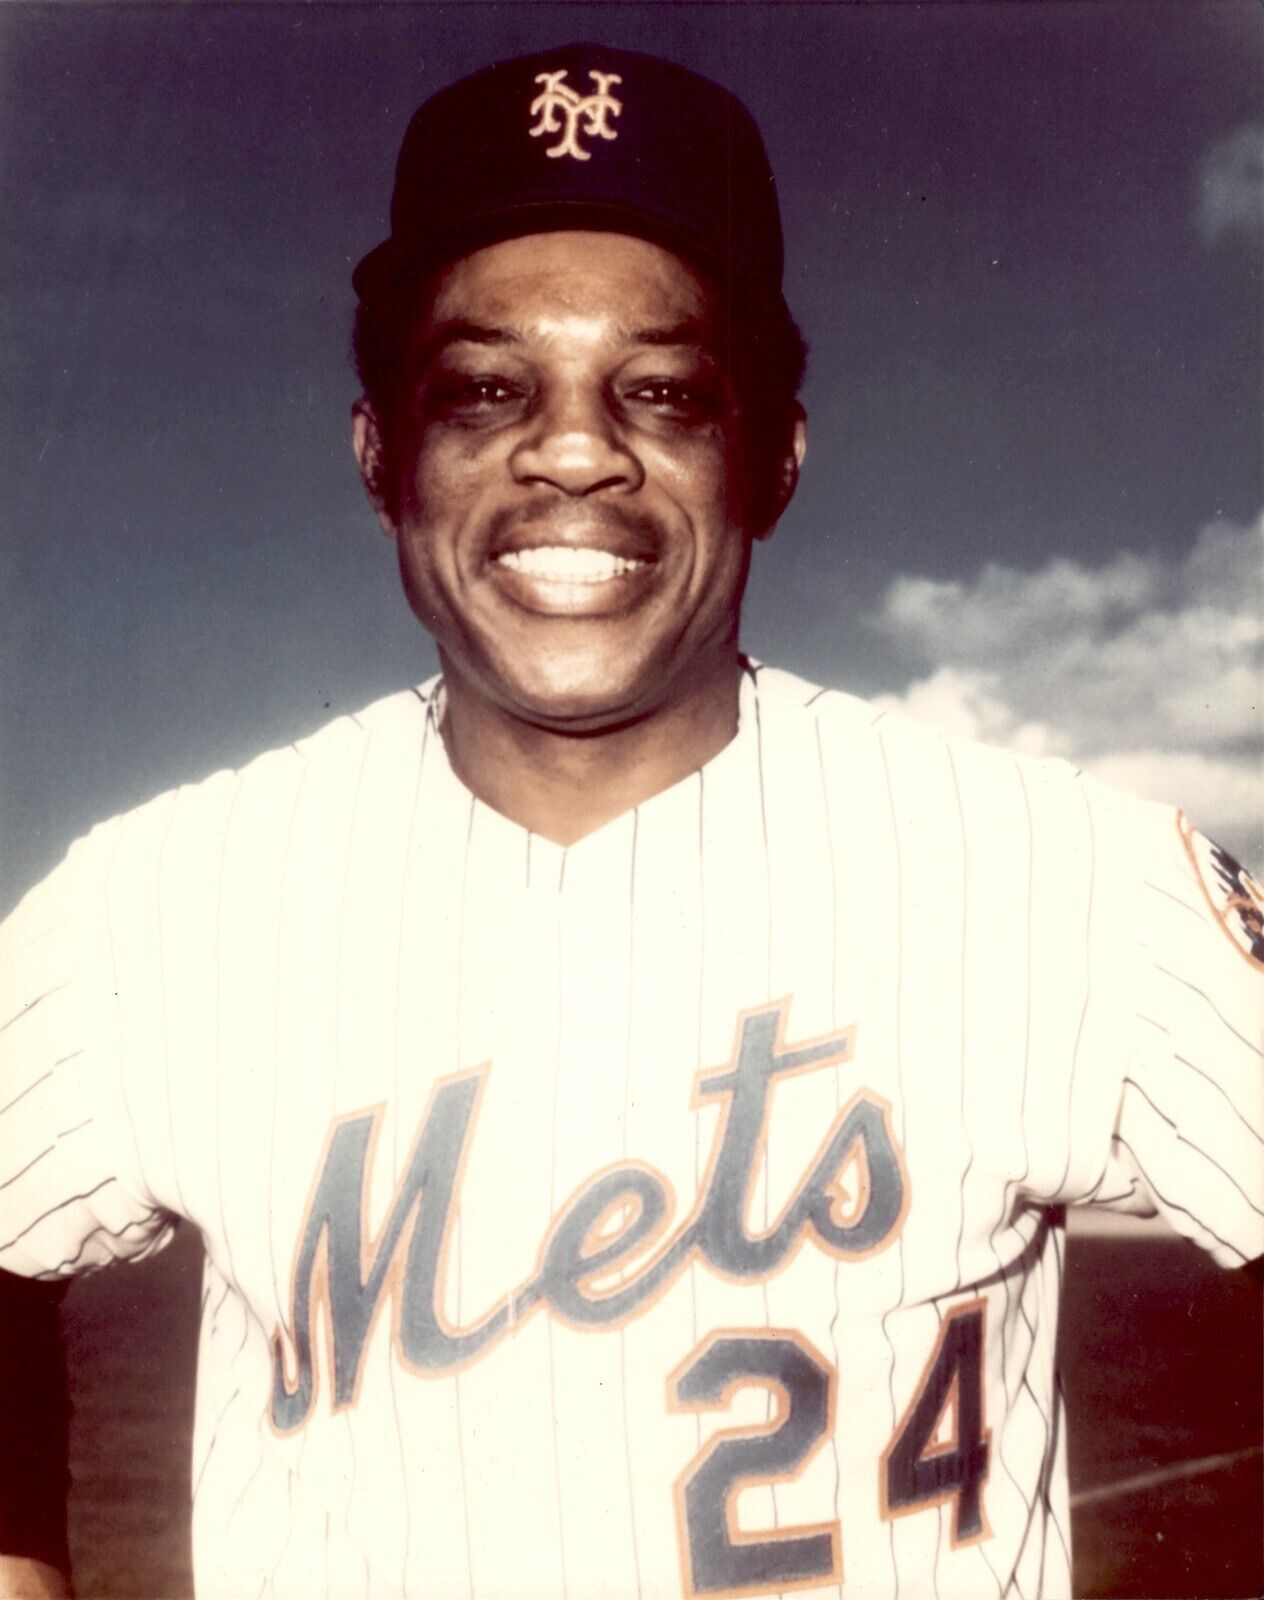 BR19 Rare Vintage Color Photo WILLIE MAYS New York Mets Baseball Hall of Famer